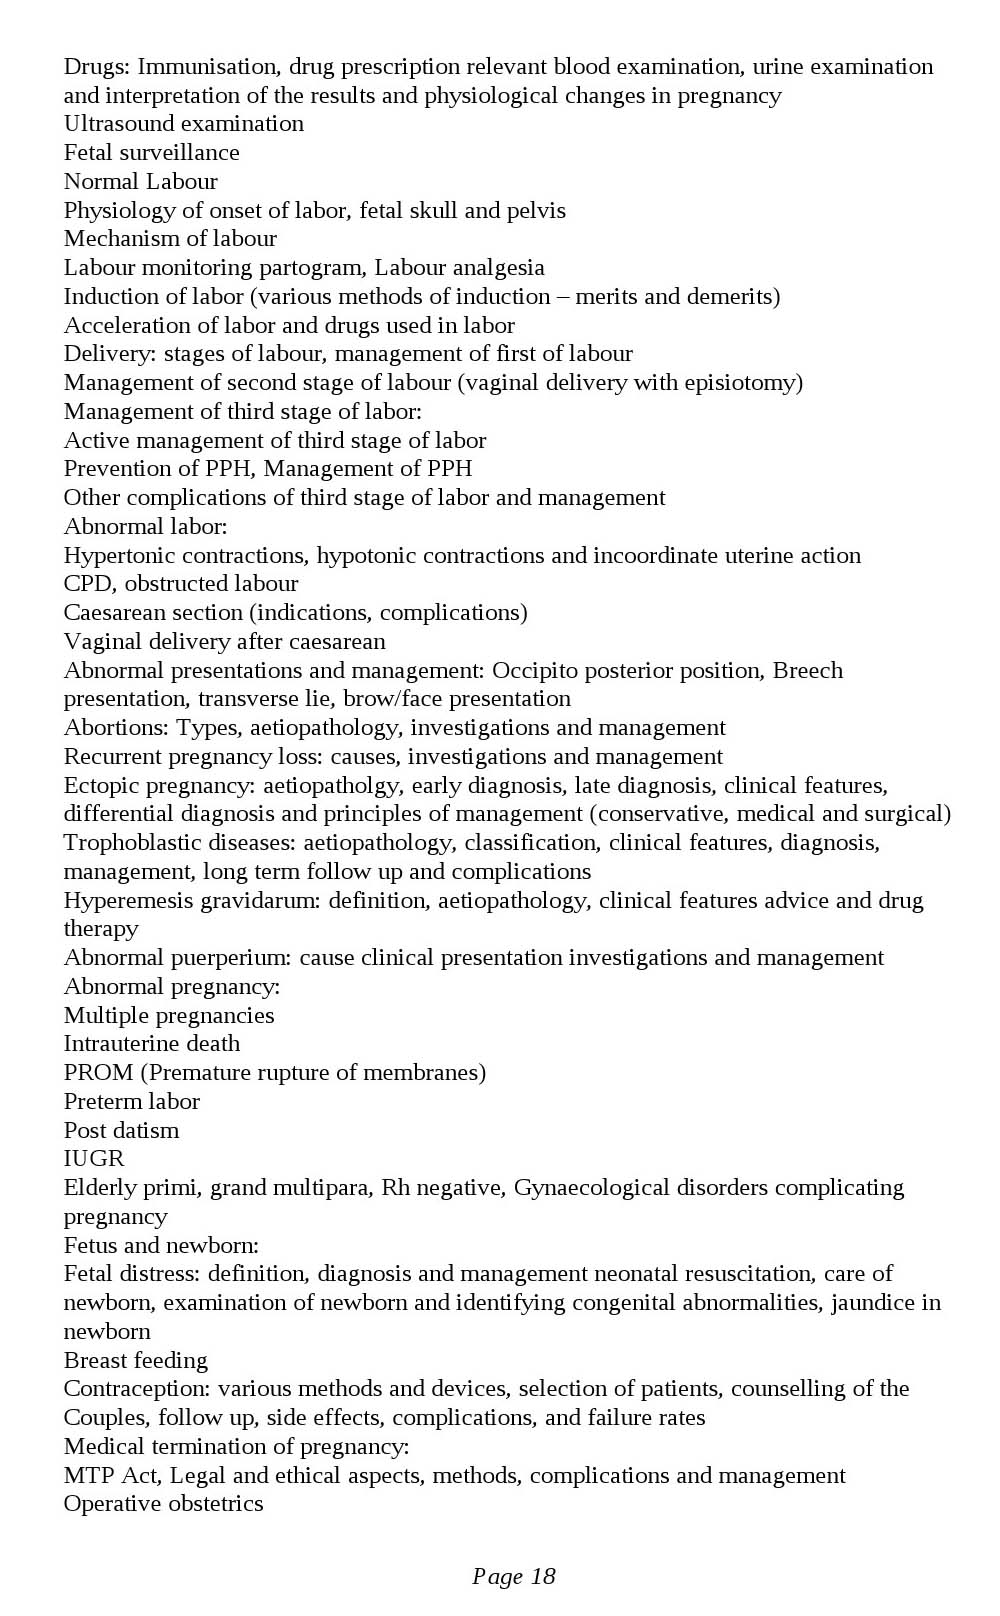 Kerala PSC Assistant Surgeon Exam Syllabus May 2020 - Notification Image 18